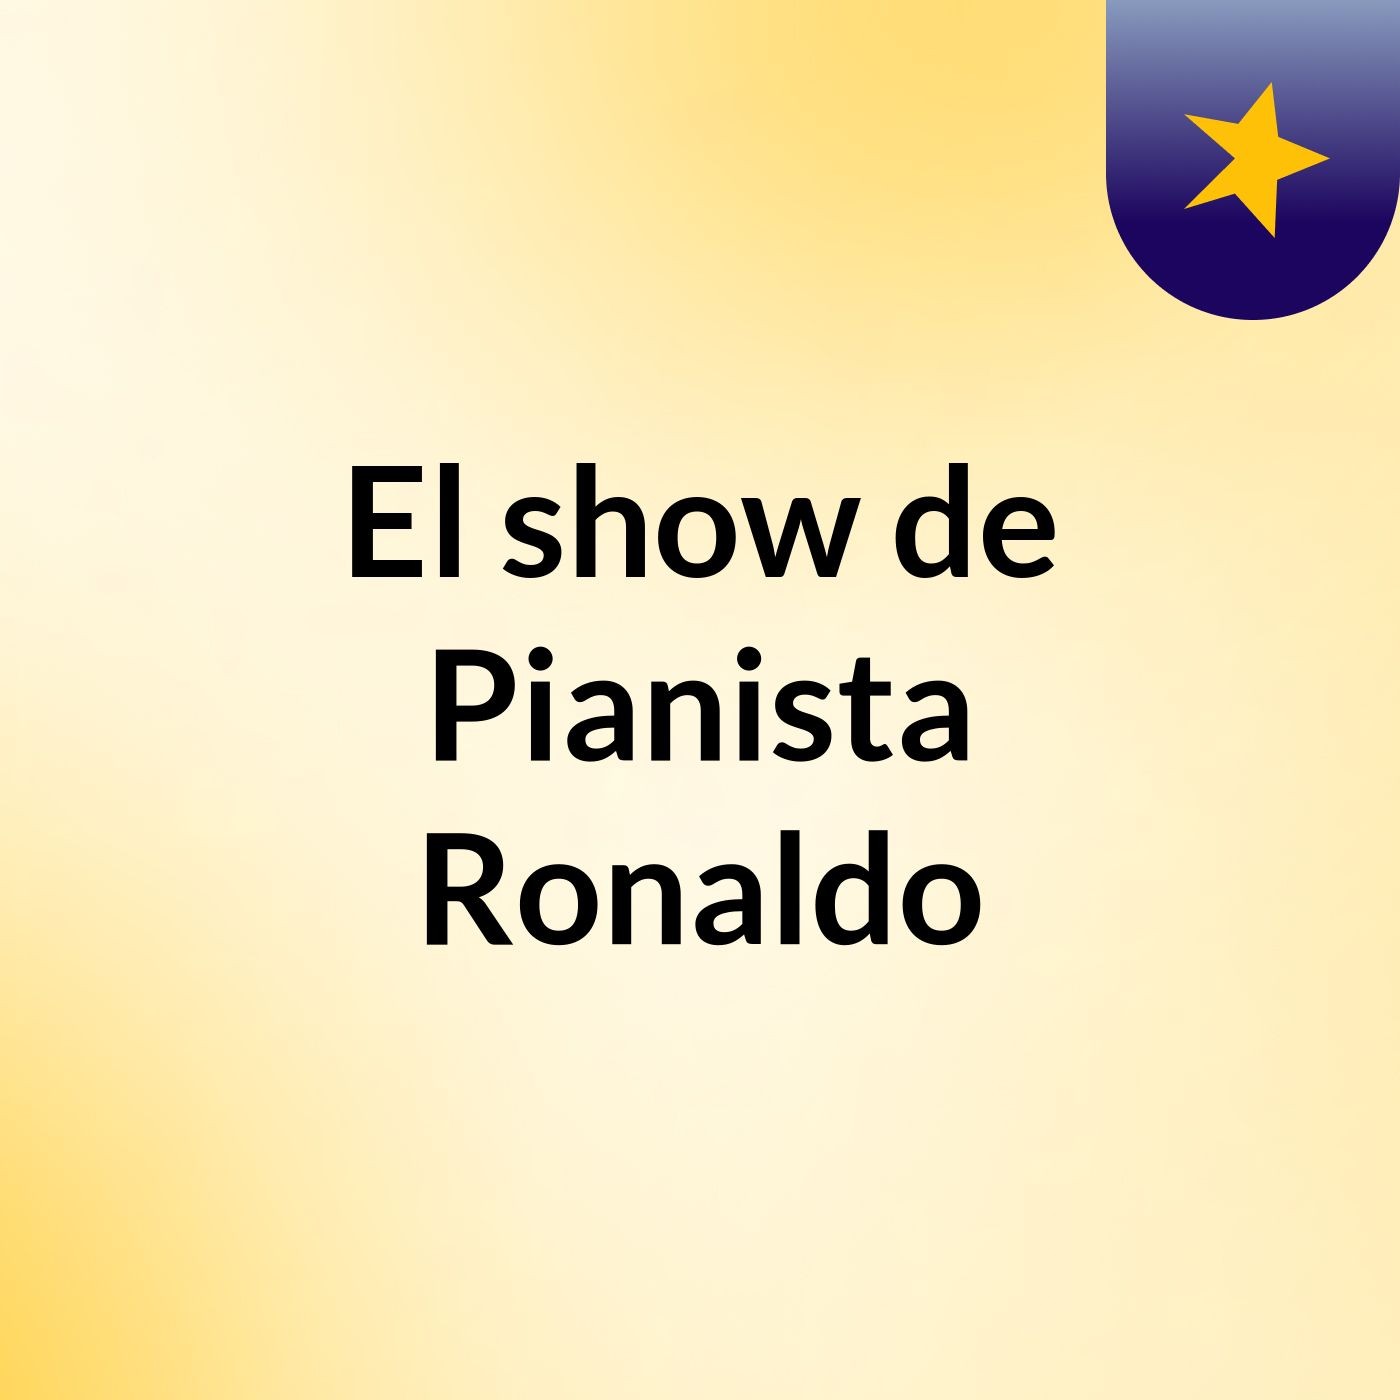 El show de Pianista Ronaldo